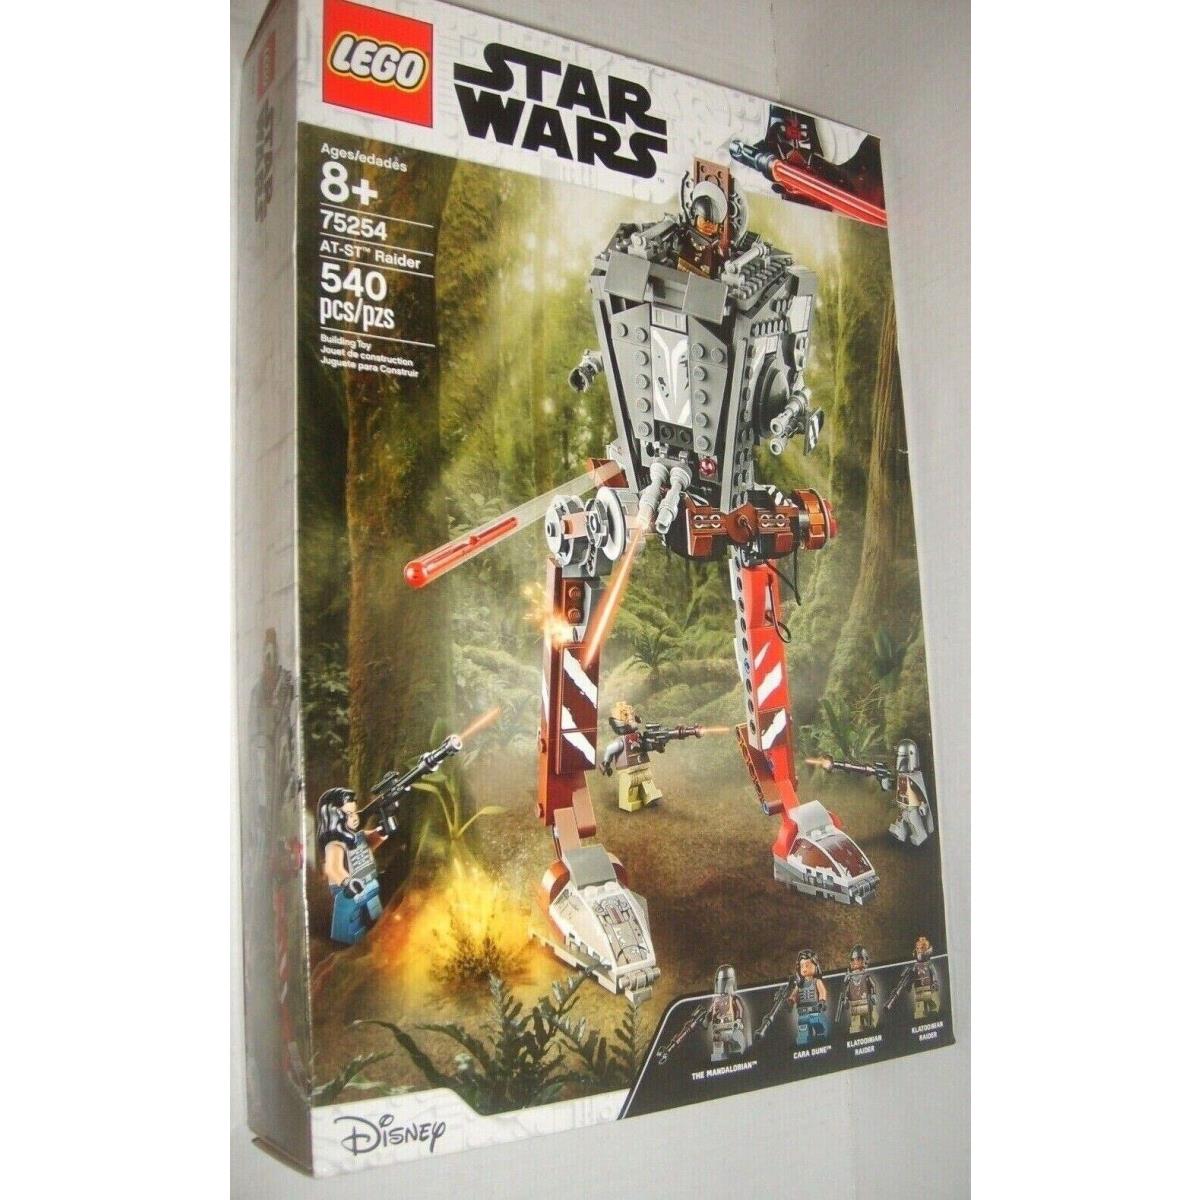 Lego Disney At-st Raider Star Wars 75254 540 Pieces 2019 Lucas Film Retired